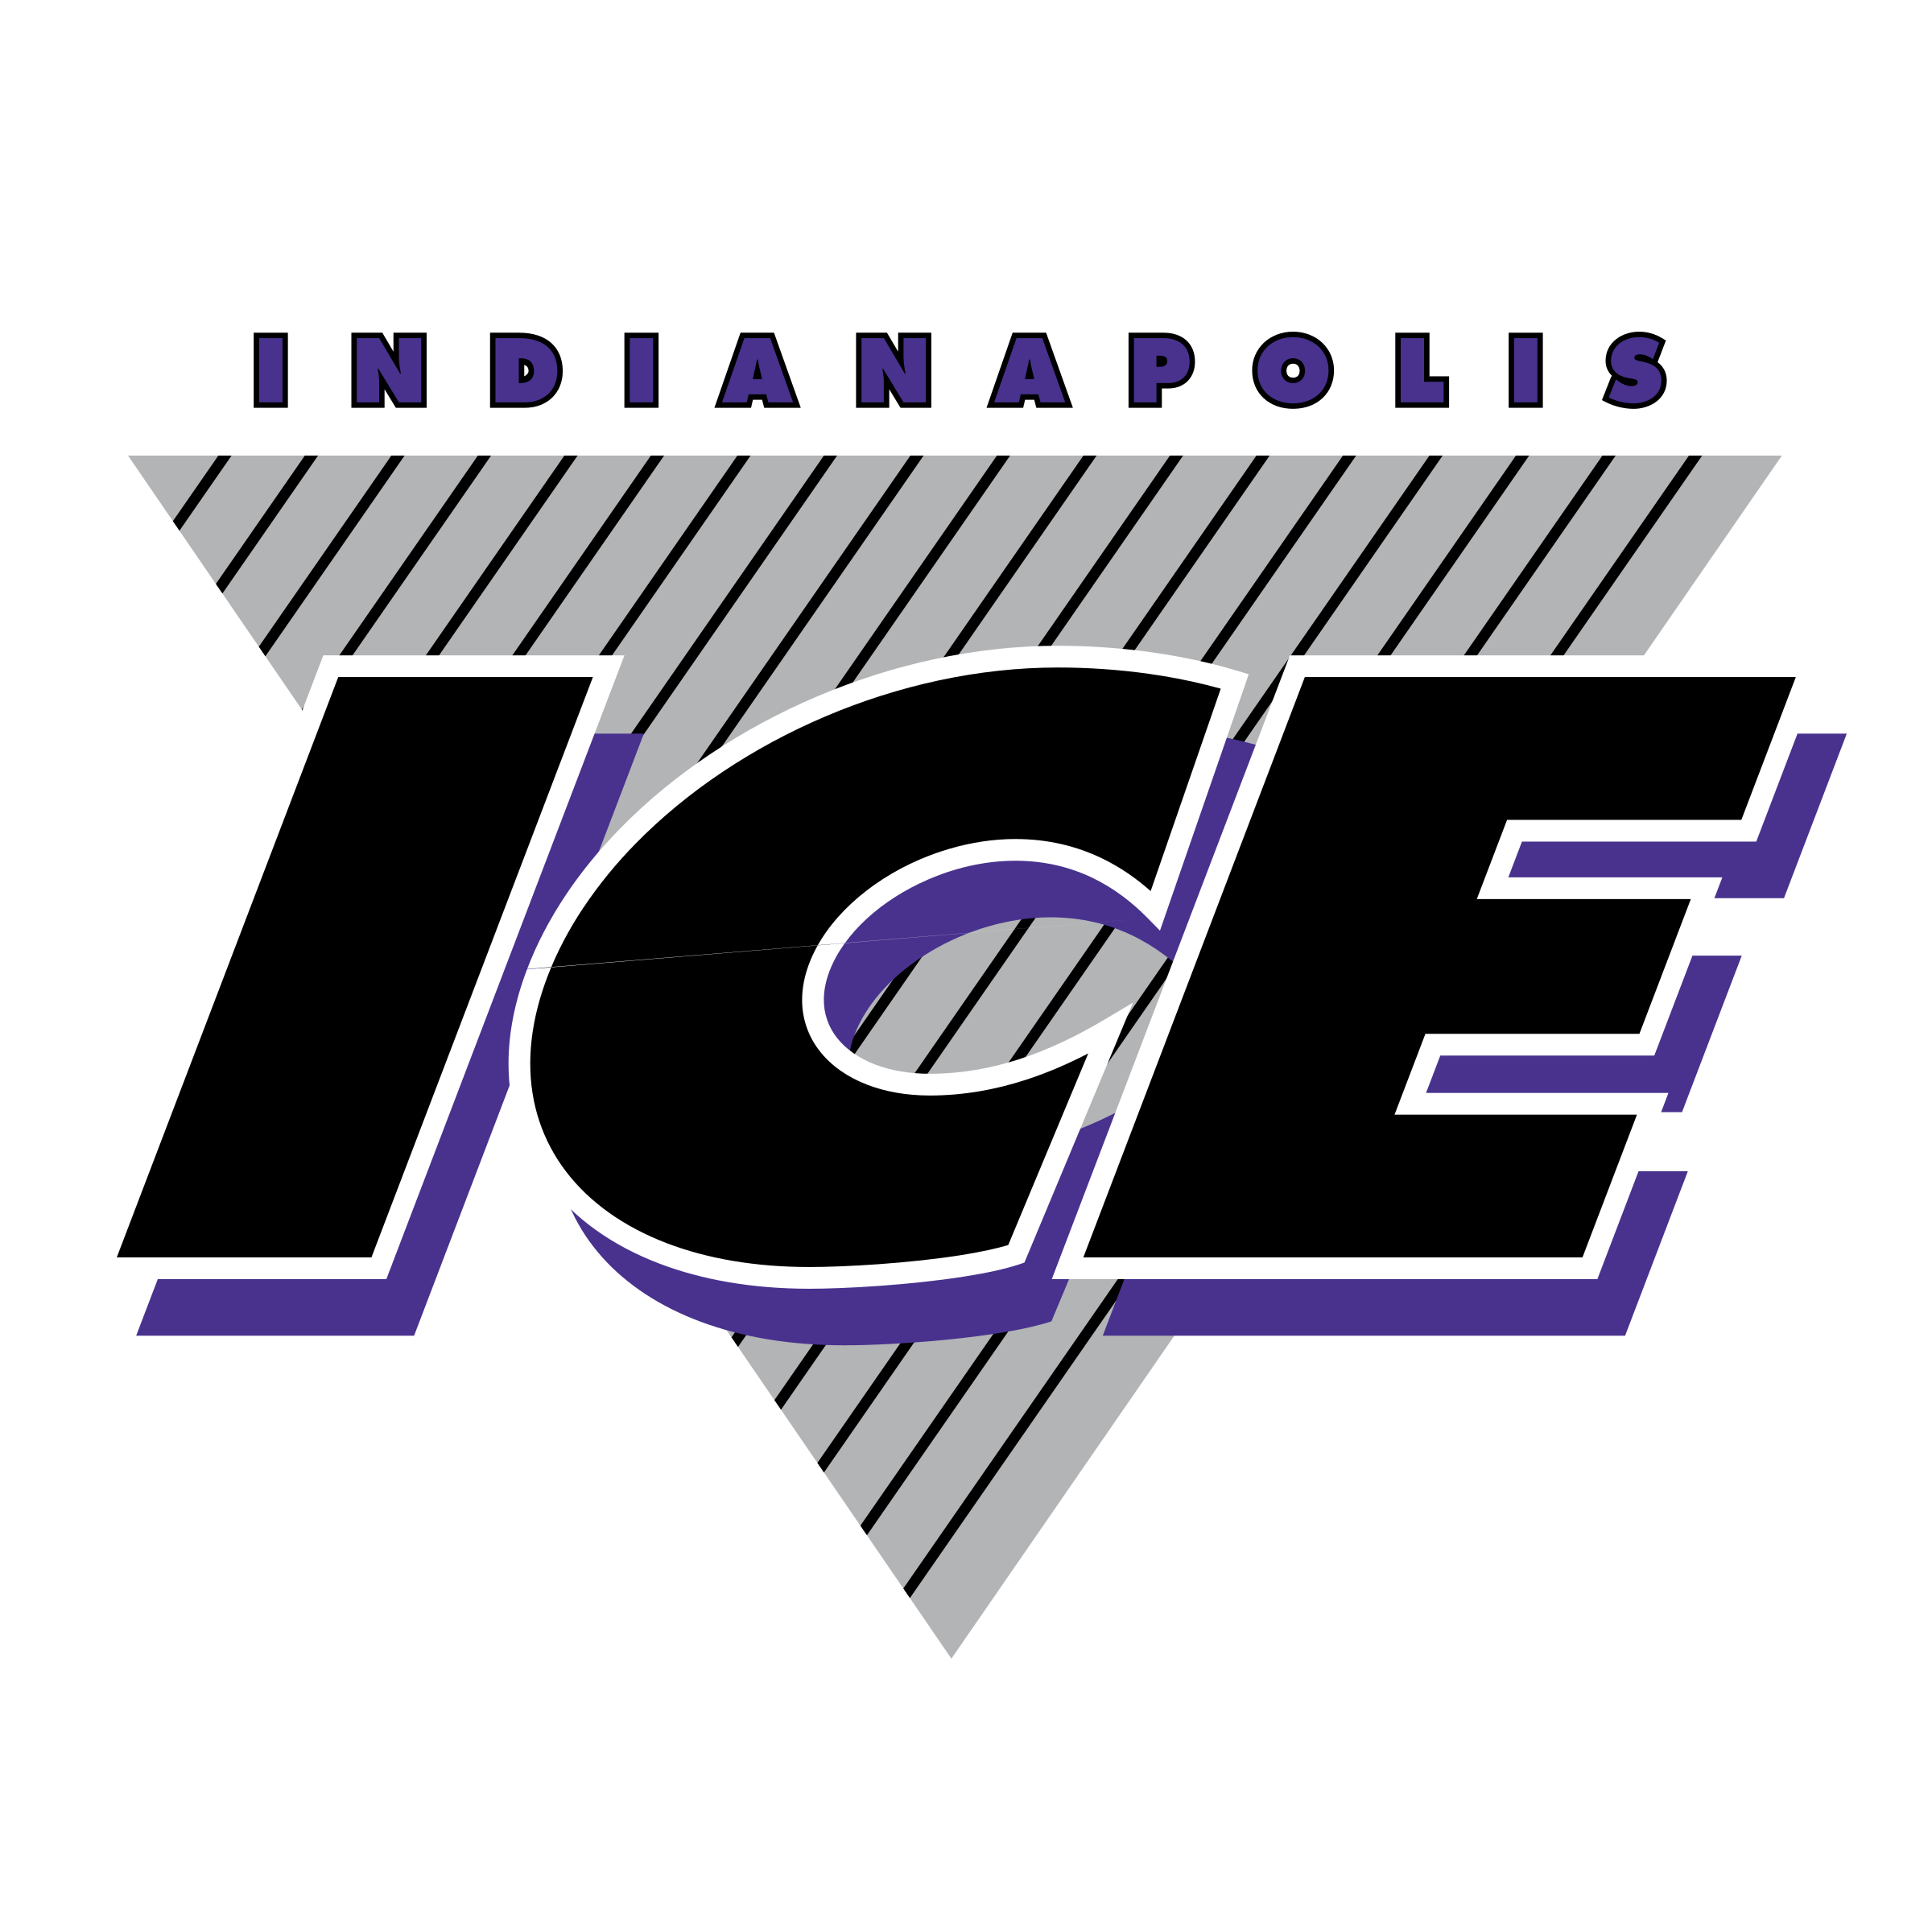 Indianapolis Logo - Indianapolis Ice Logo PNG Transparent & SVG Vector - Freebie Supply